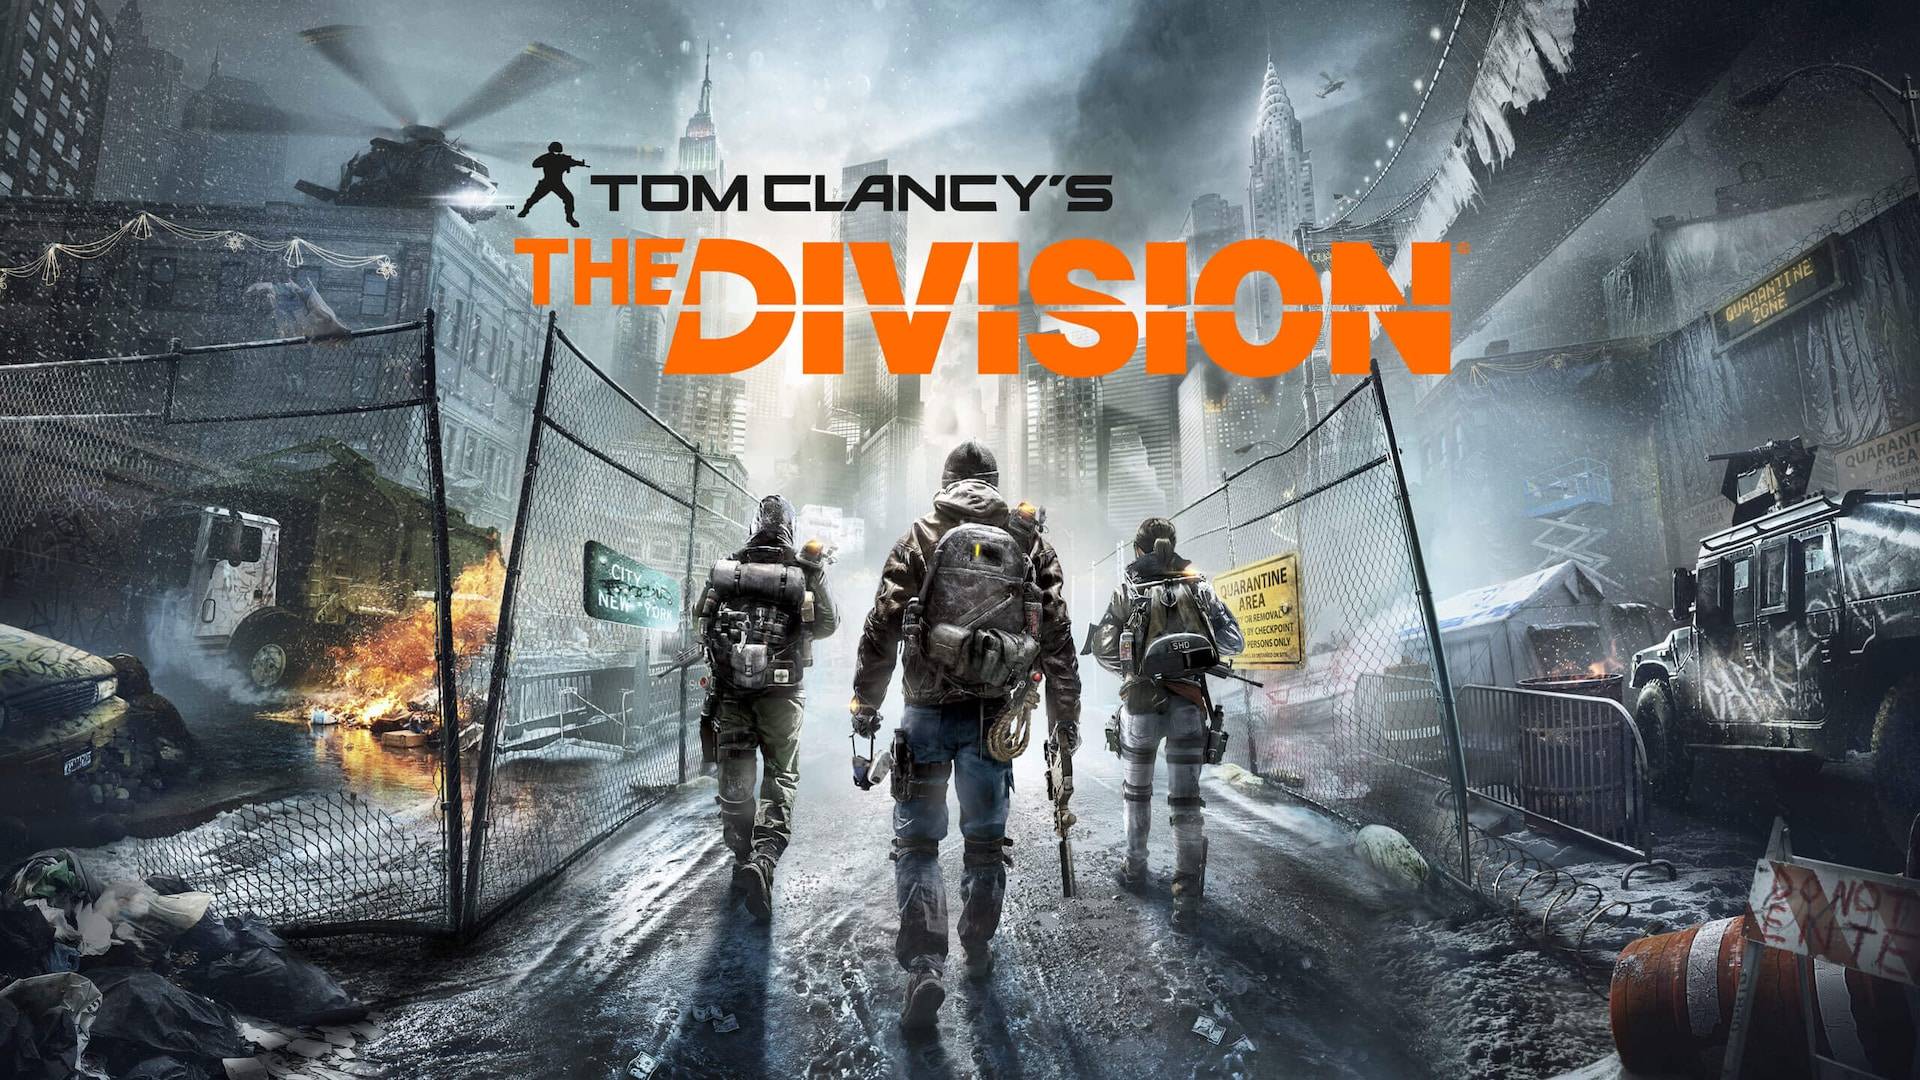 135 TL'lik Tom Clancy's The Division ücretsiz oldu!